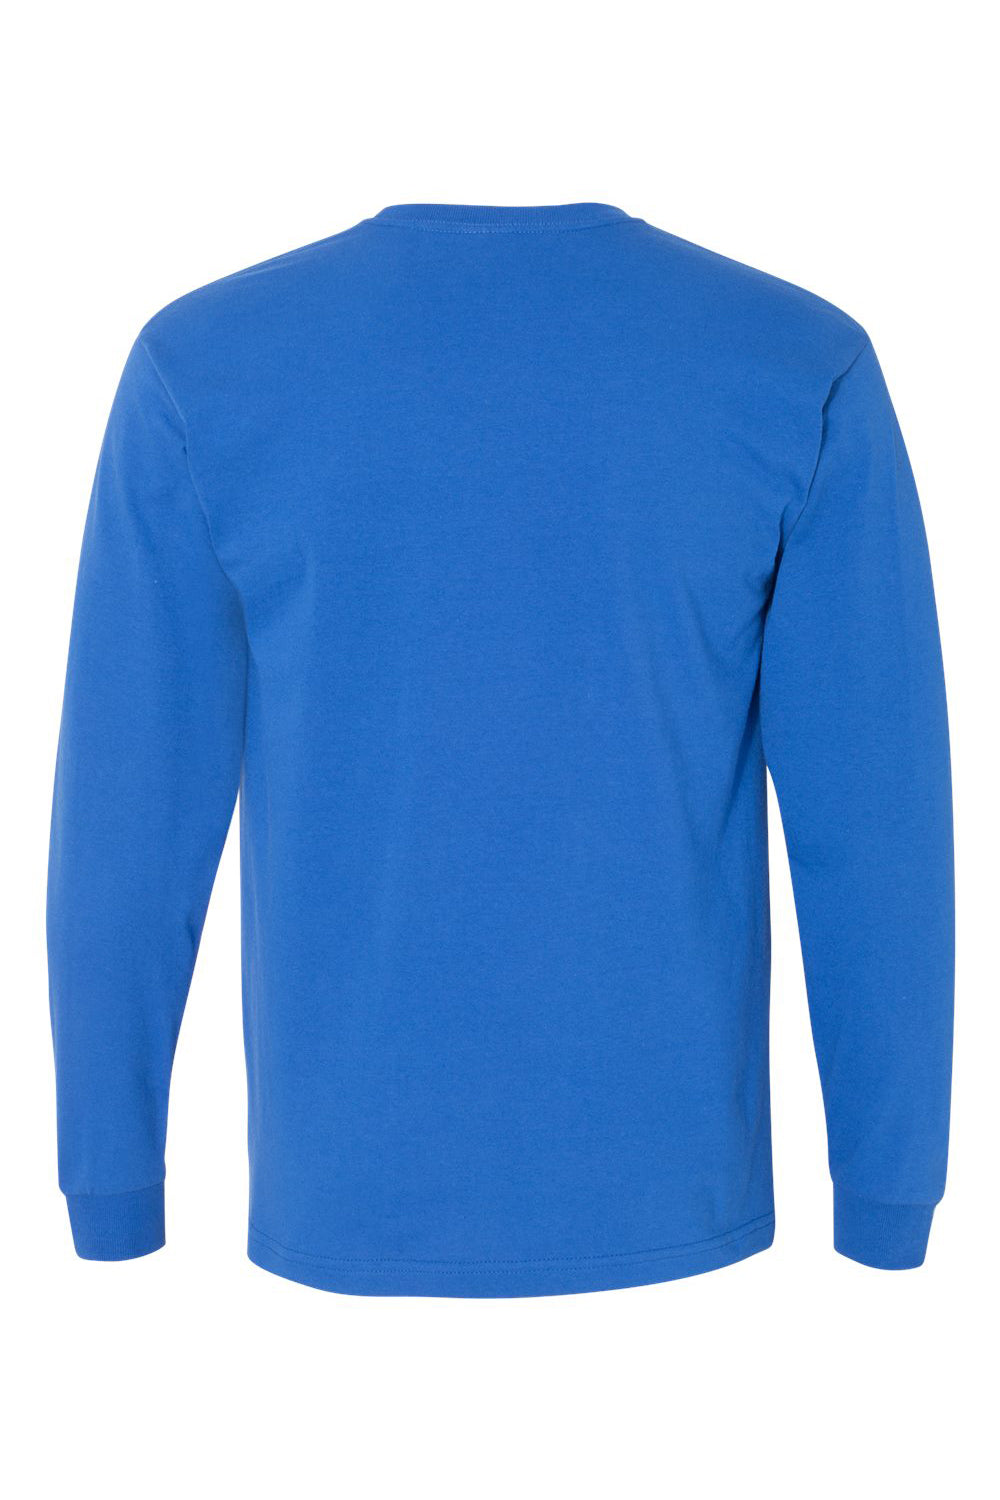 Bayside BA5060 Mens USA Made Long Sleeve Crewneck T-Shirt Royal Blue Flat Back